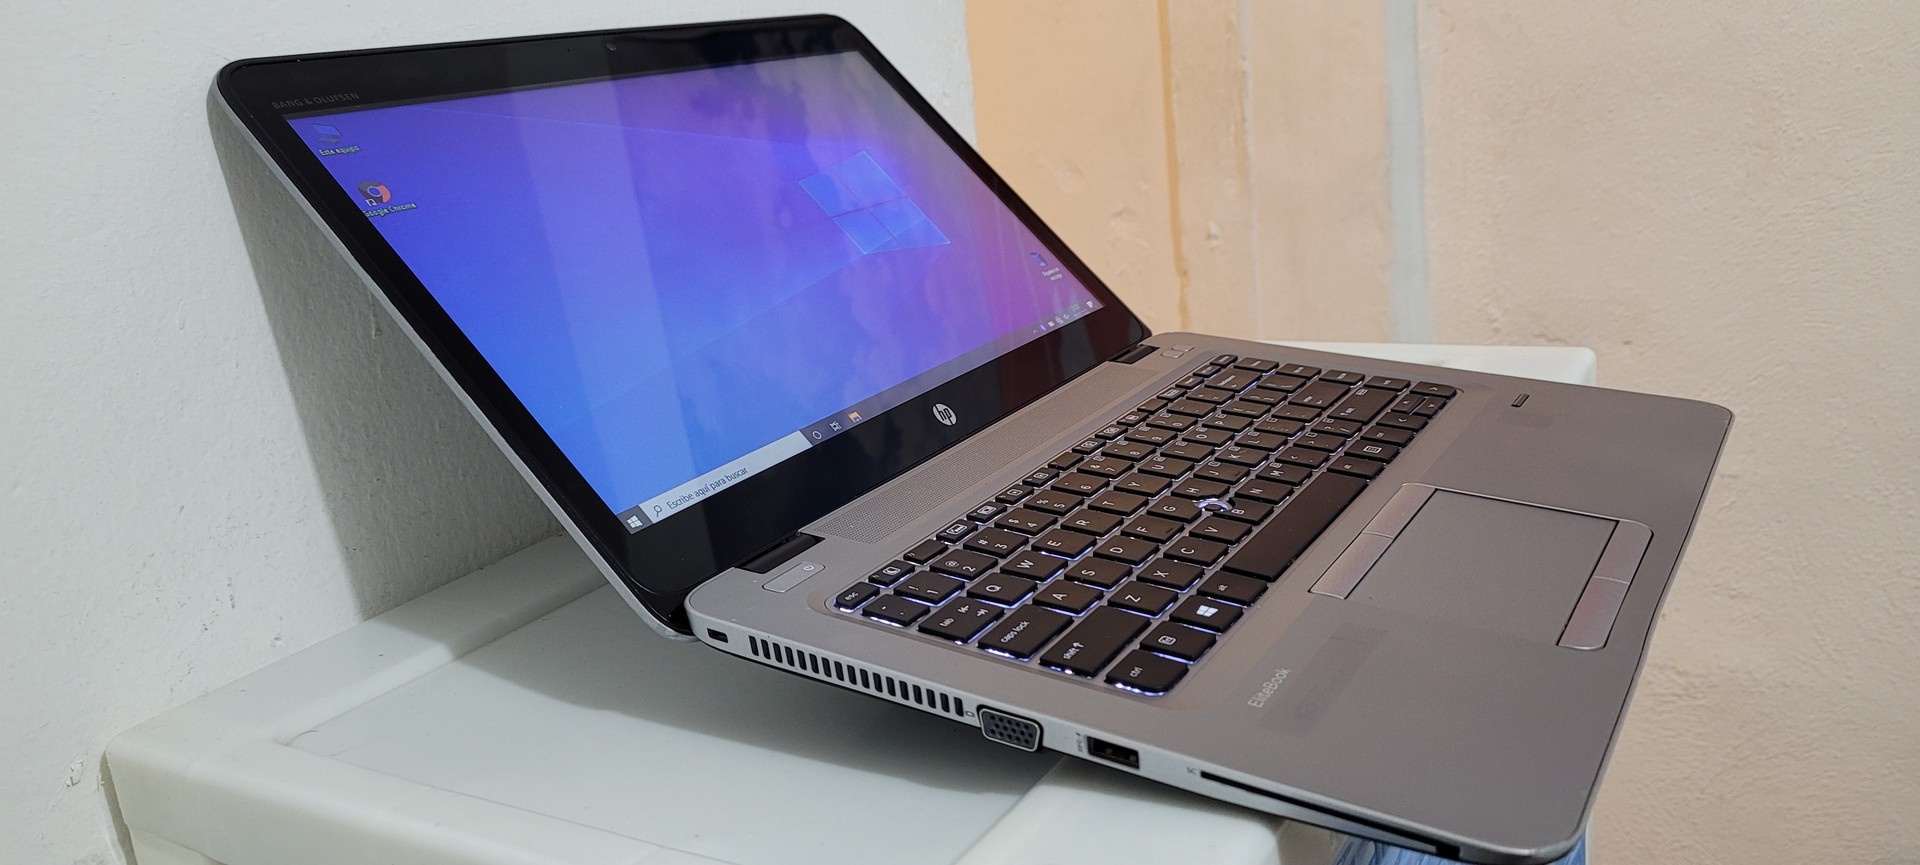 computadoras y laptops - Laptop hp Slim 14 Pulg Core i5 Ram 8gb Disco 500gb full 1080p 0